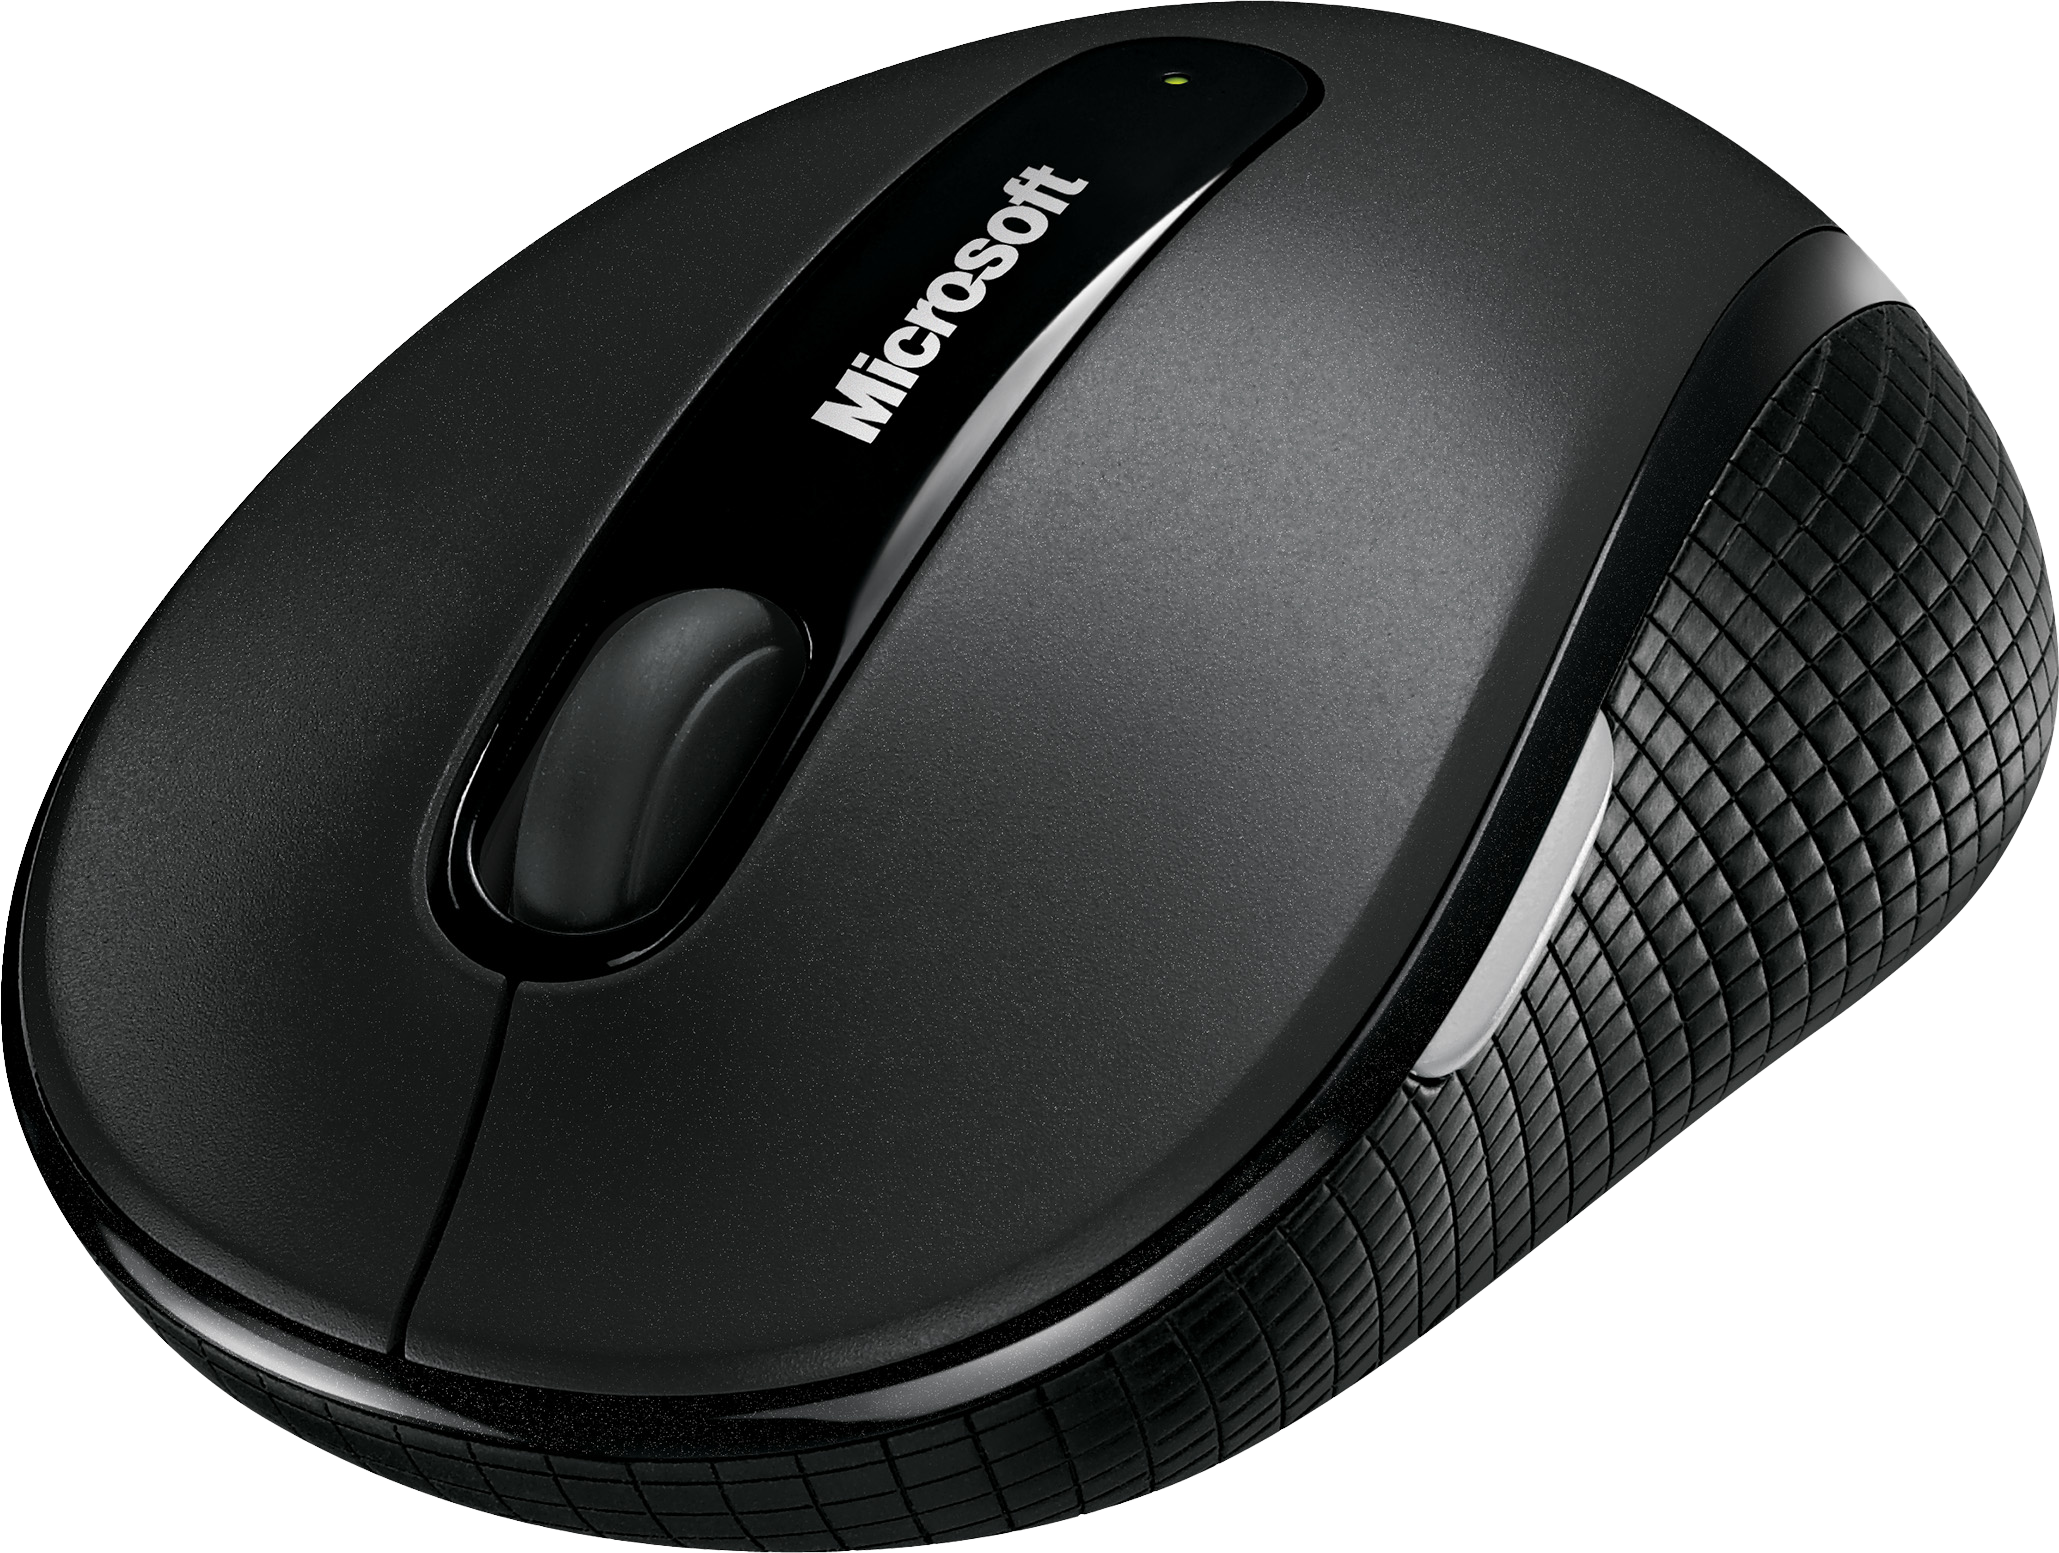 Buy Microsoft Wireless Mobile Mouse 4000 Microsoft Store